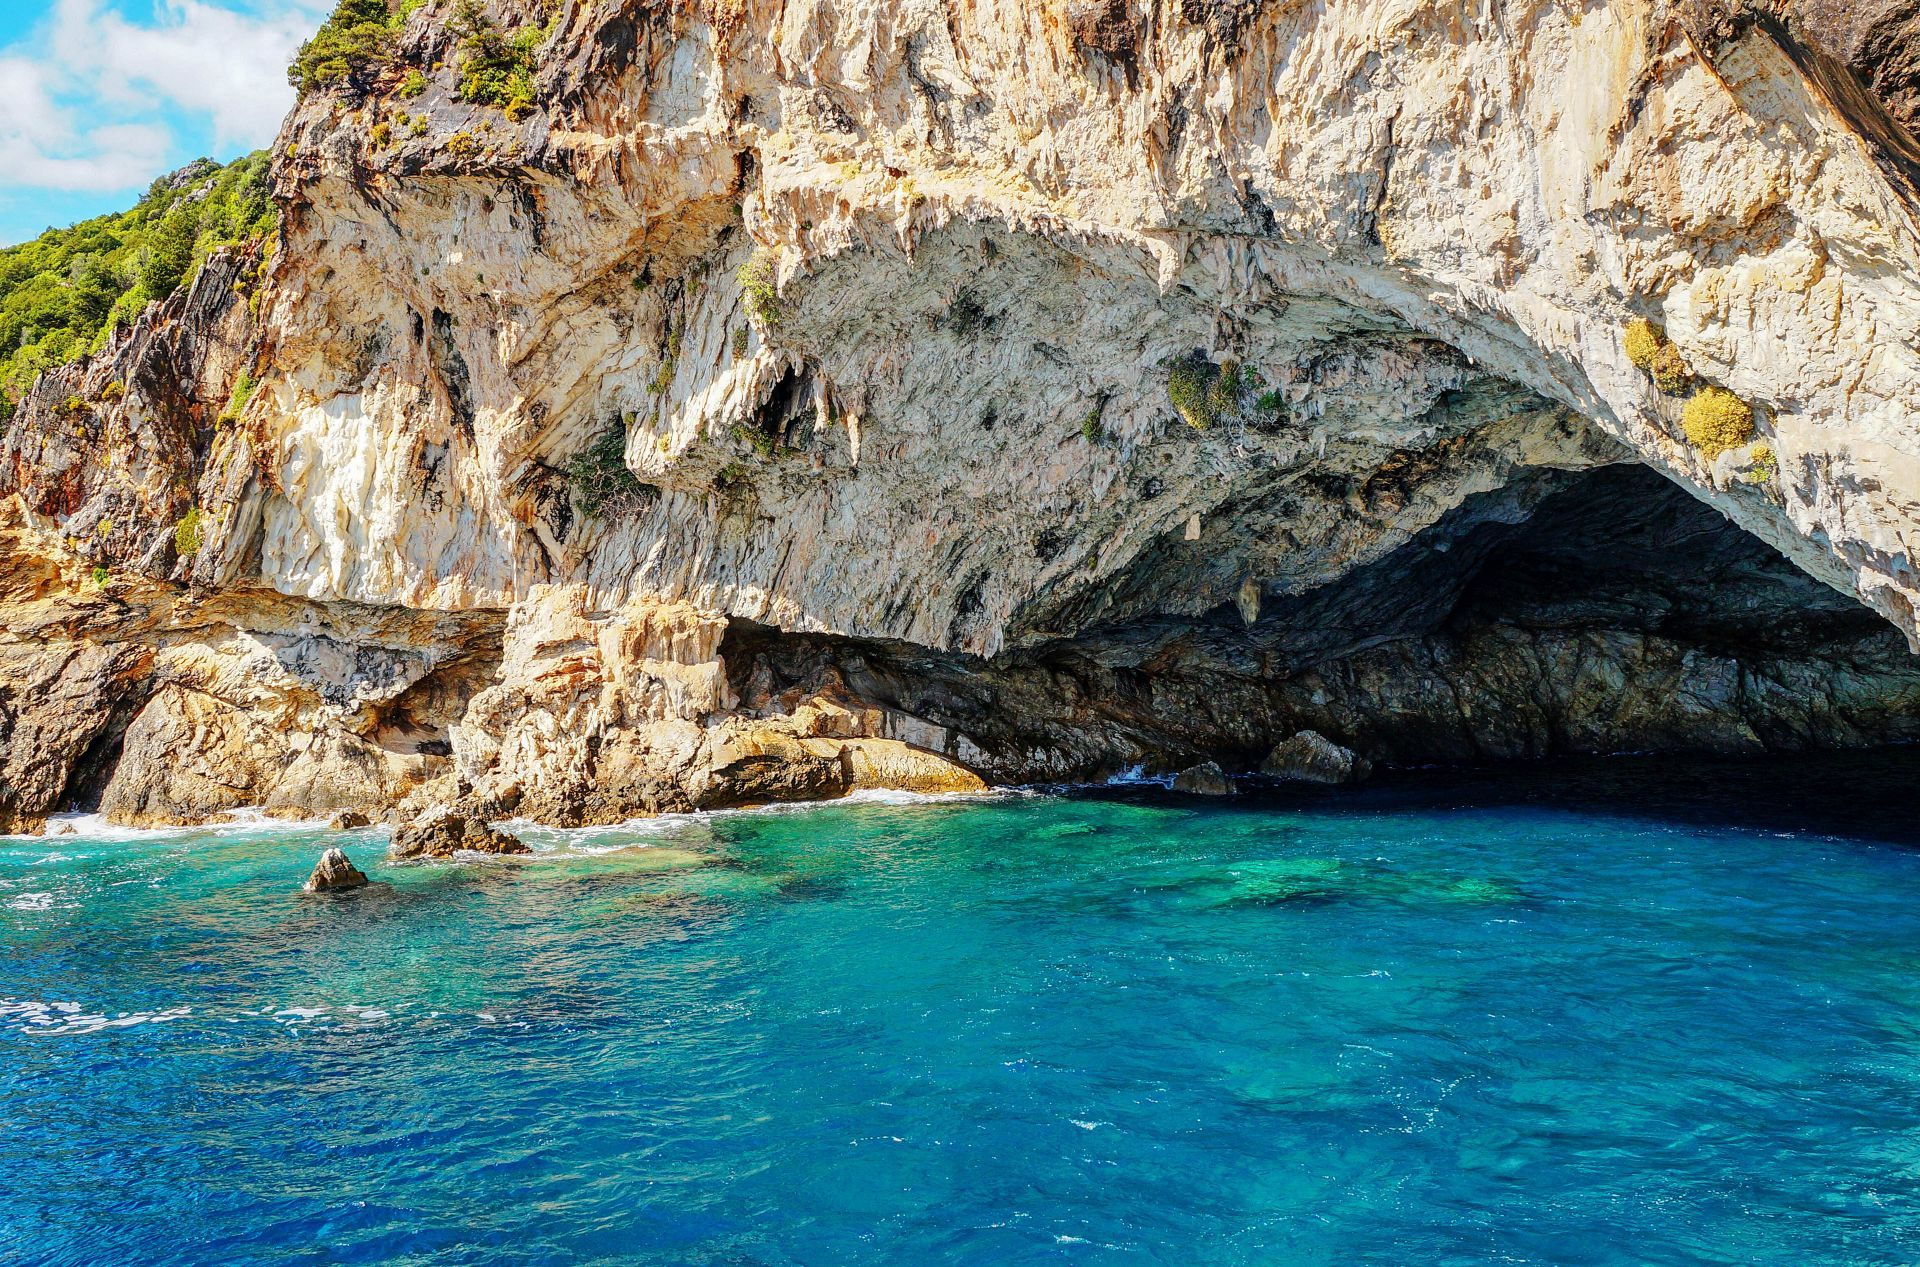 Meganisi island: The Sea caves